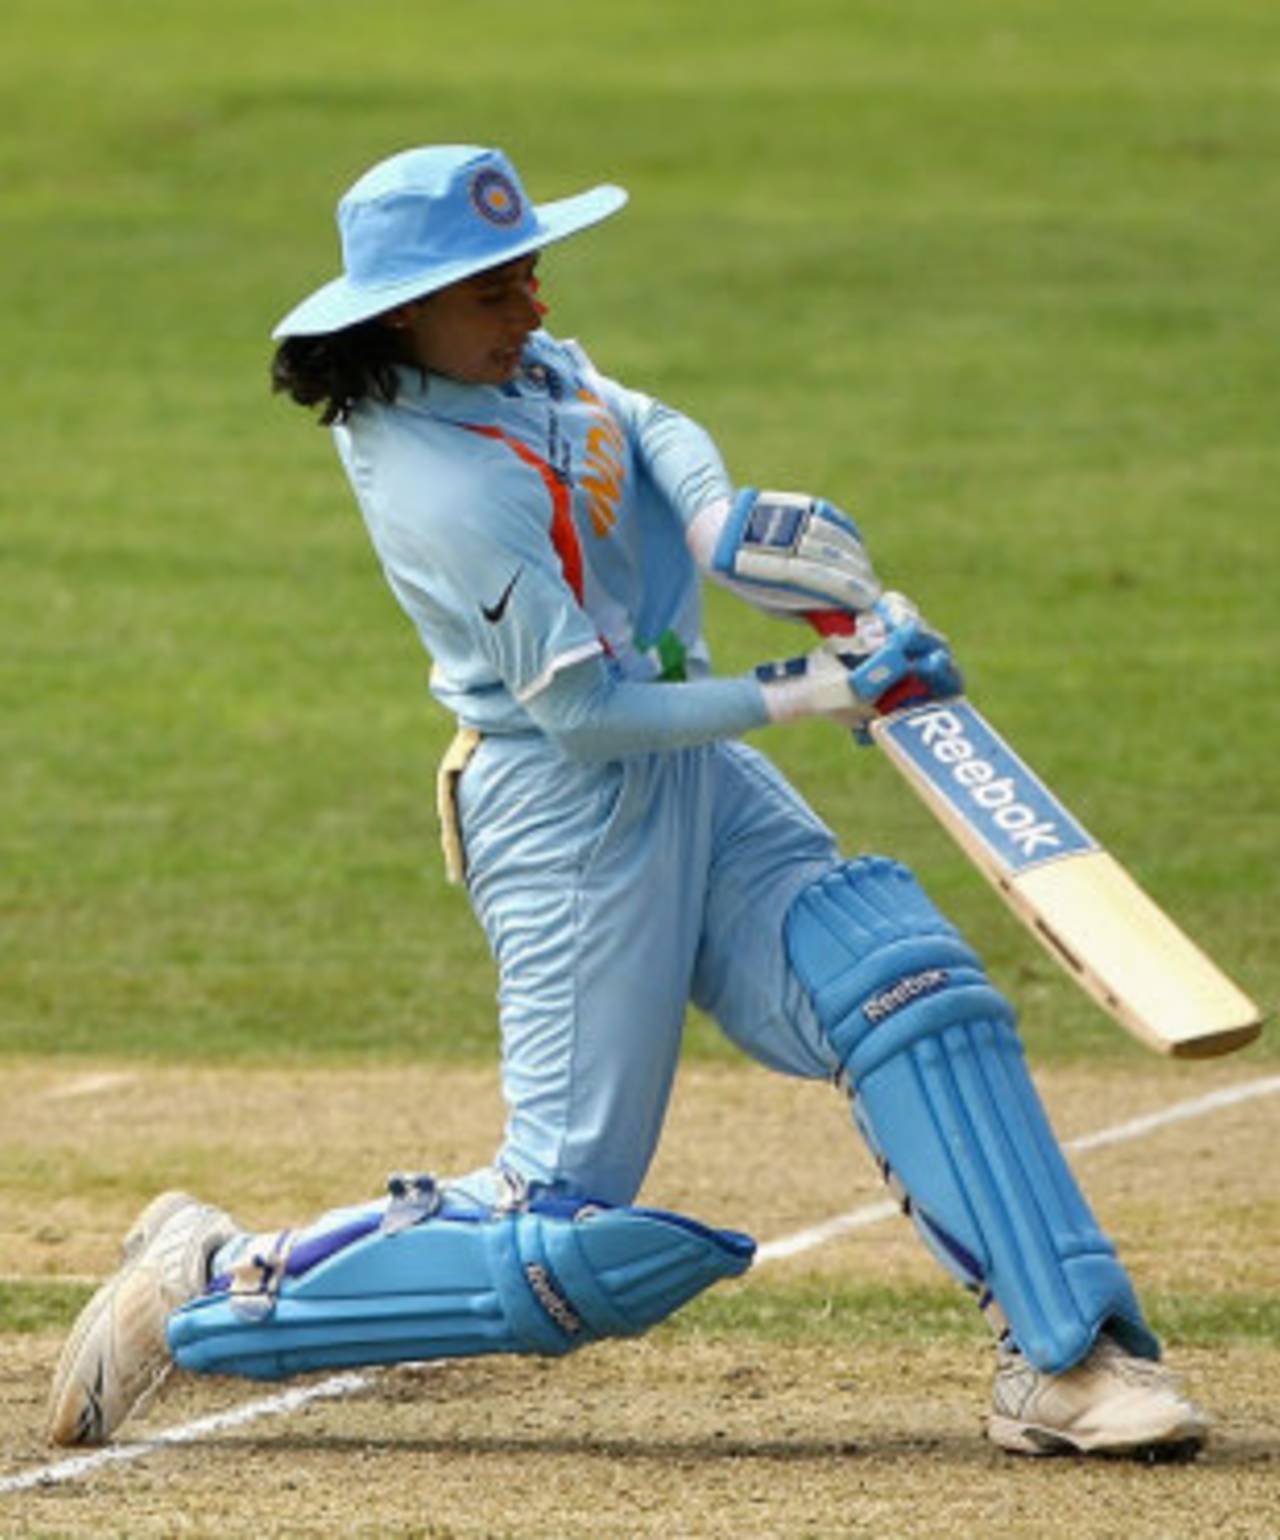 Mithali Raj launches into one, Australia v India, Super Six, women's World Cup, Sydney, March 14, 2009